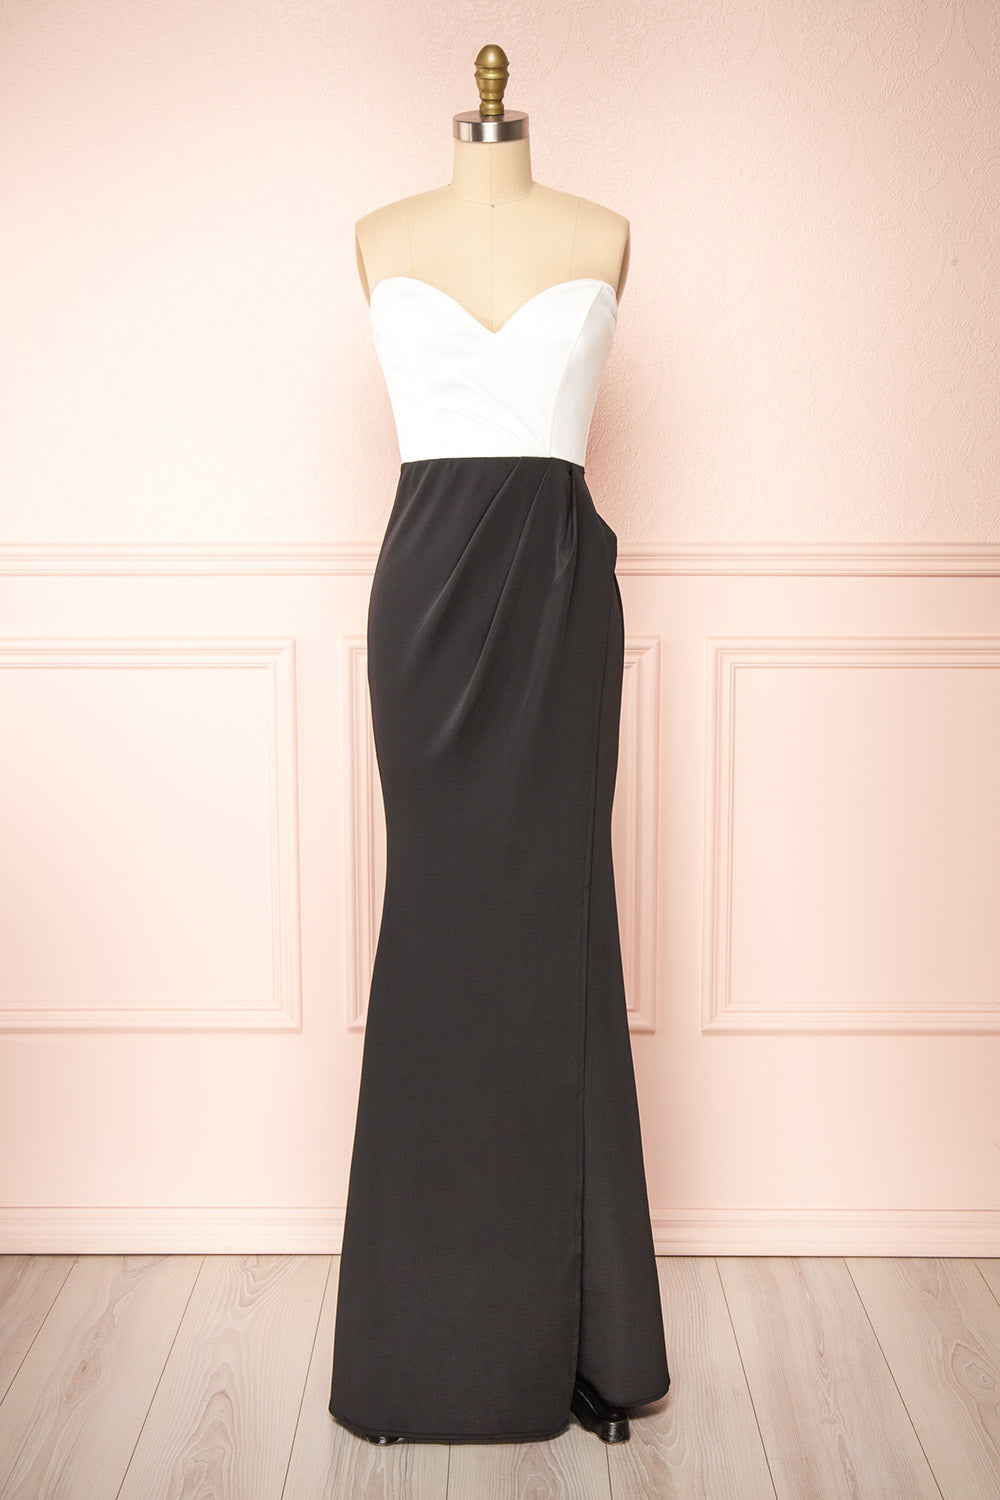 Nagini Black Draped Front Strapless Maxi Dress w/ Slit | Boutique 1861 front view 